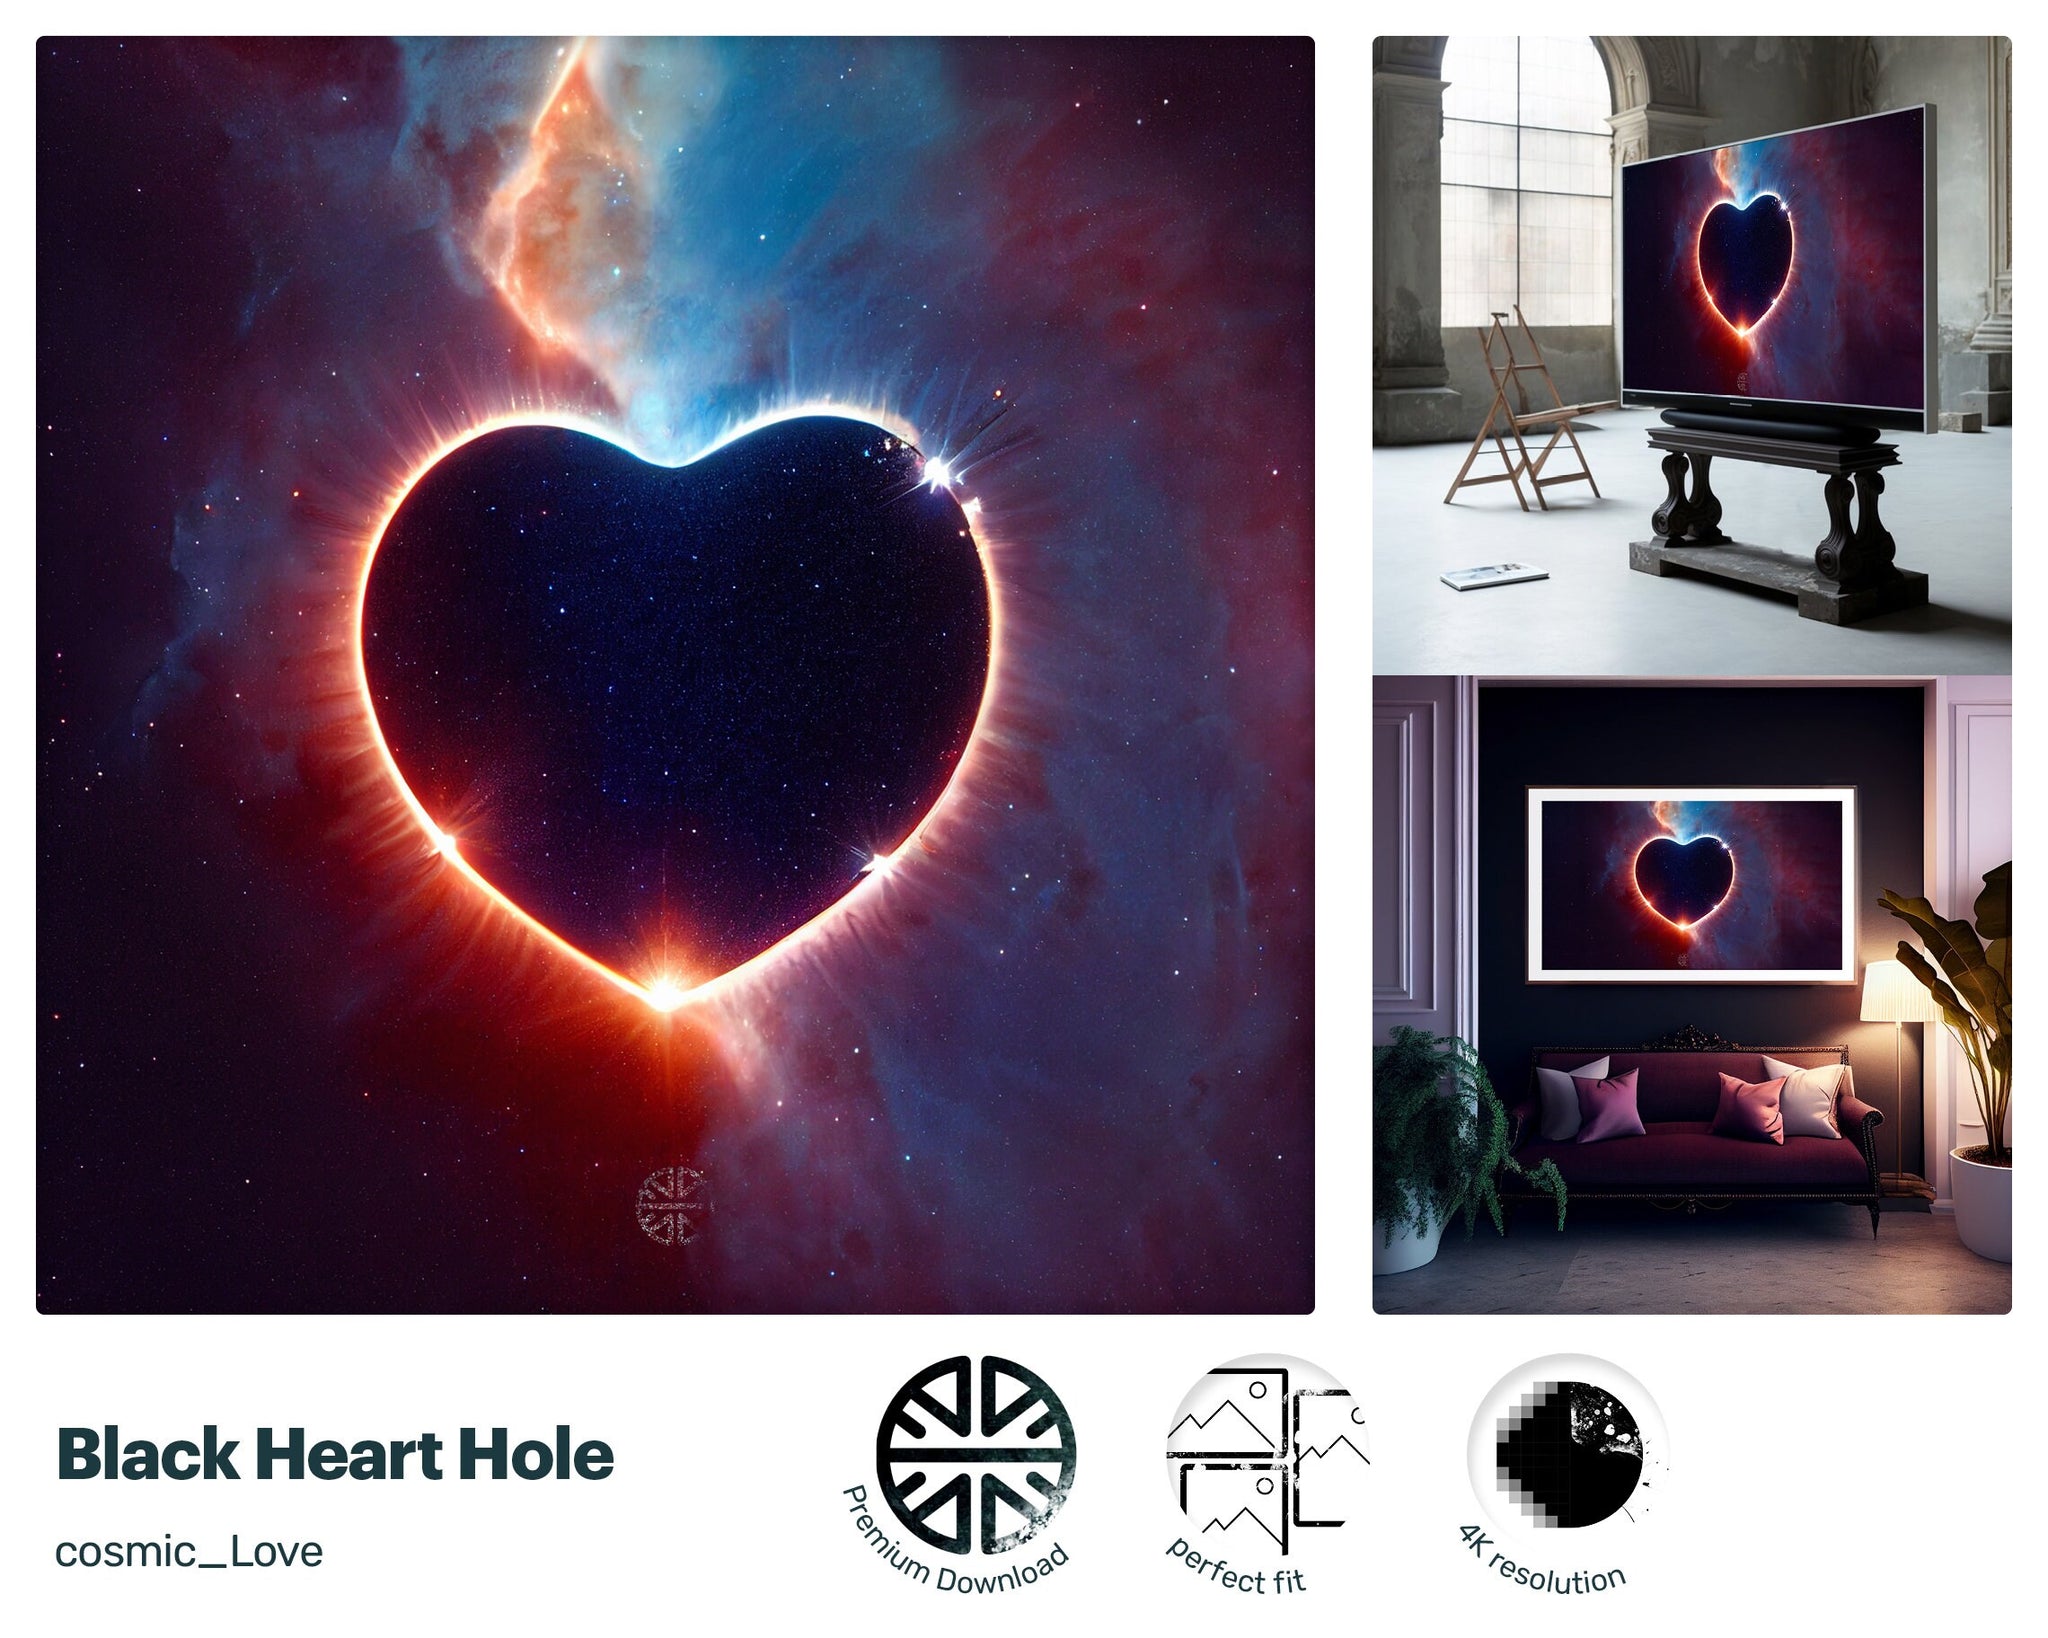 Samsung Frame TV Art, Black Heart Hole, james webb telescope, nerd culture, 2001 Space Odyssey, mens valentines gift